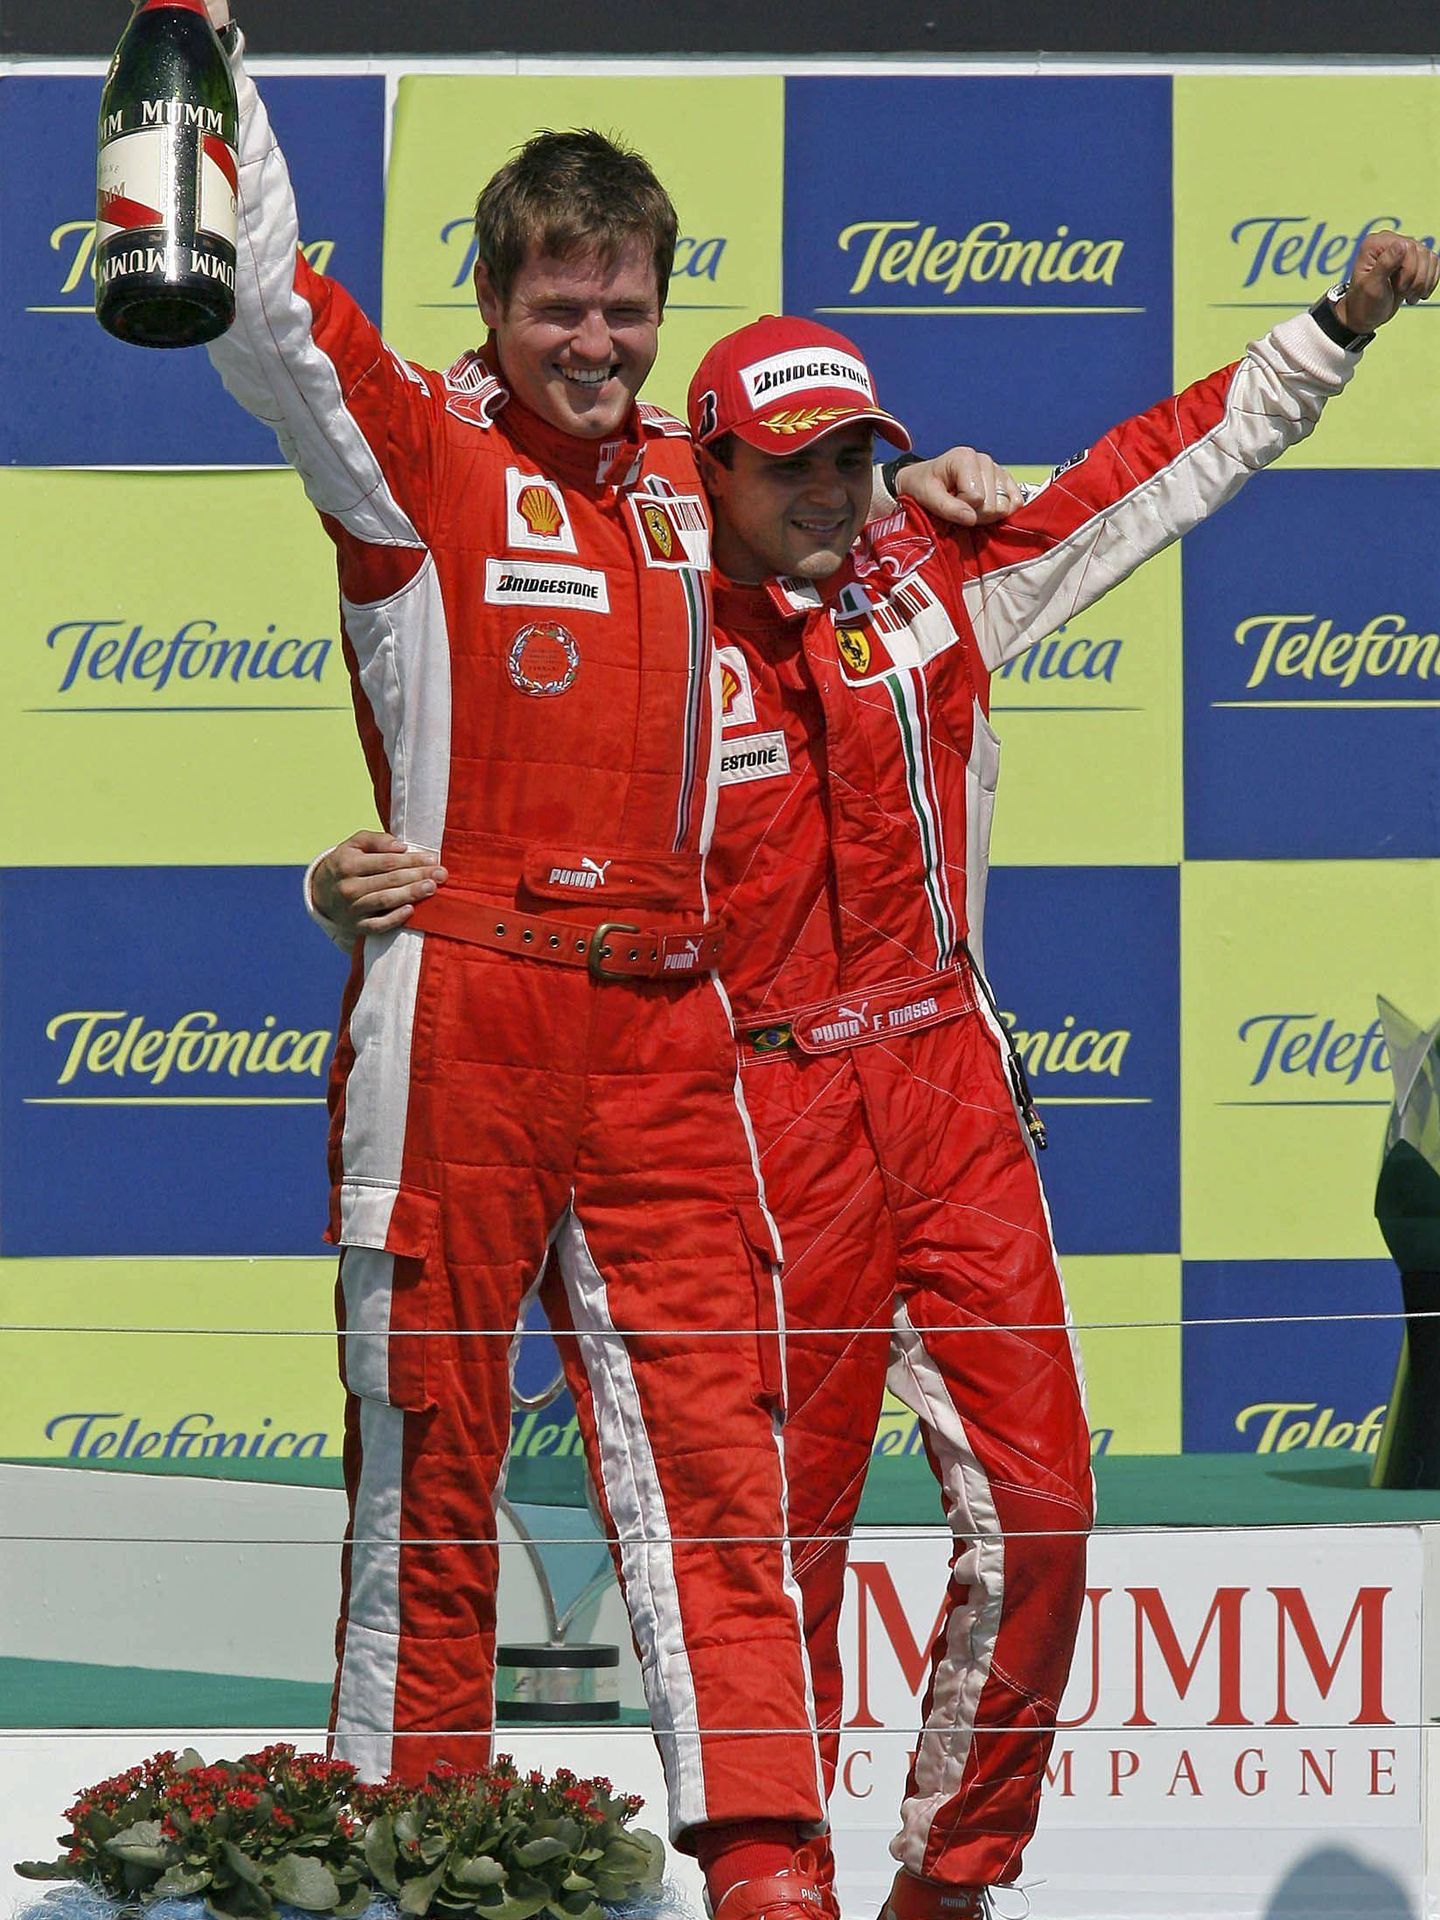 Massa junto a Rob Smedley en Valencia 08. (EFE)